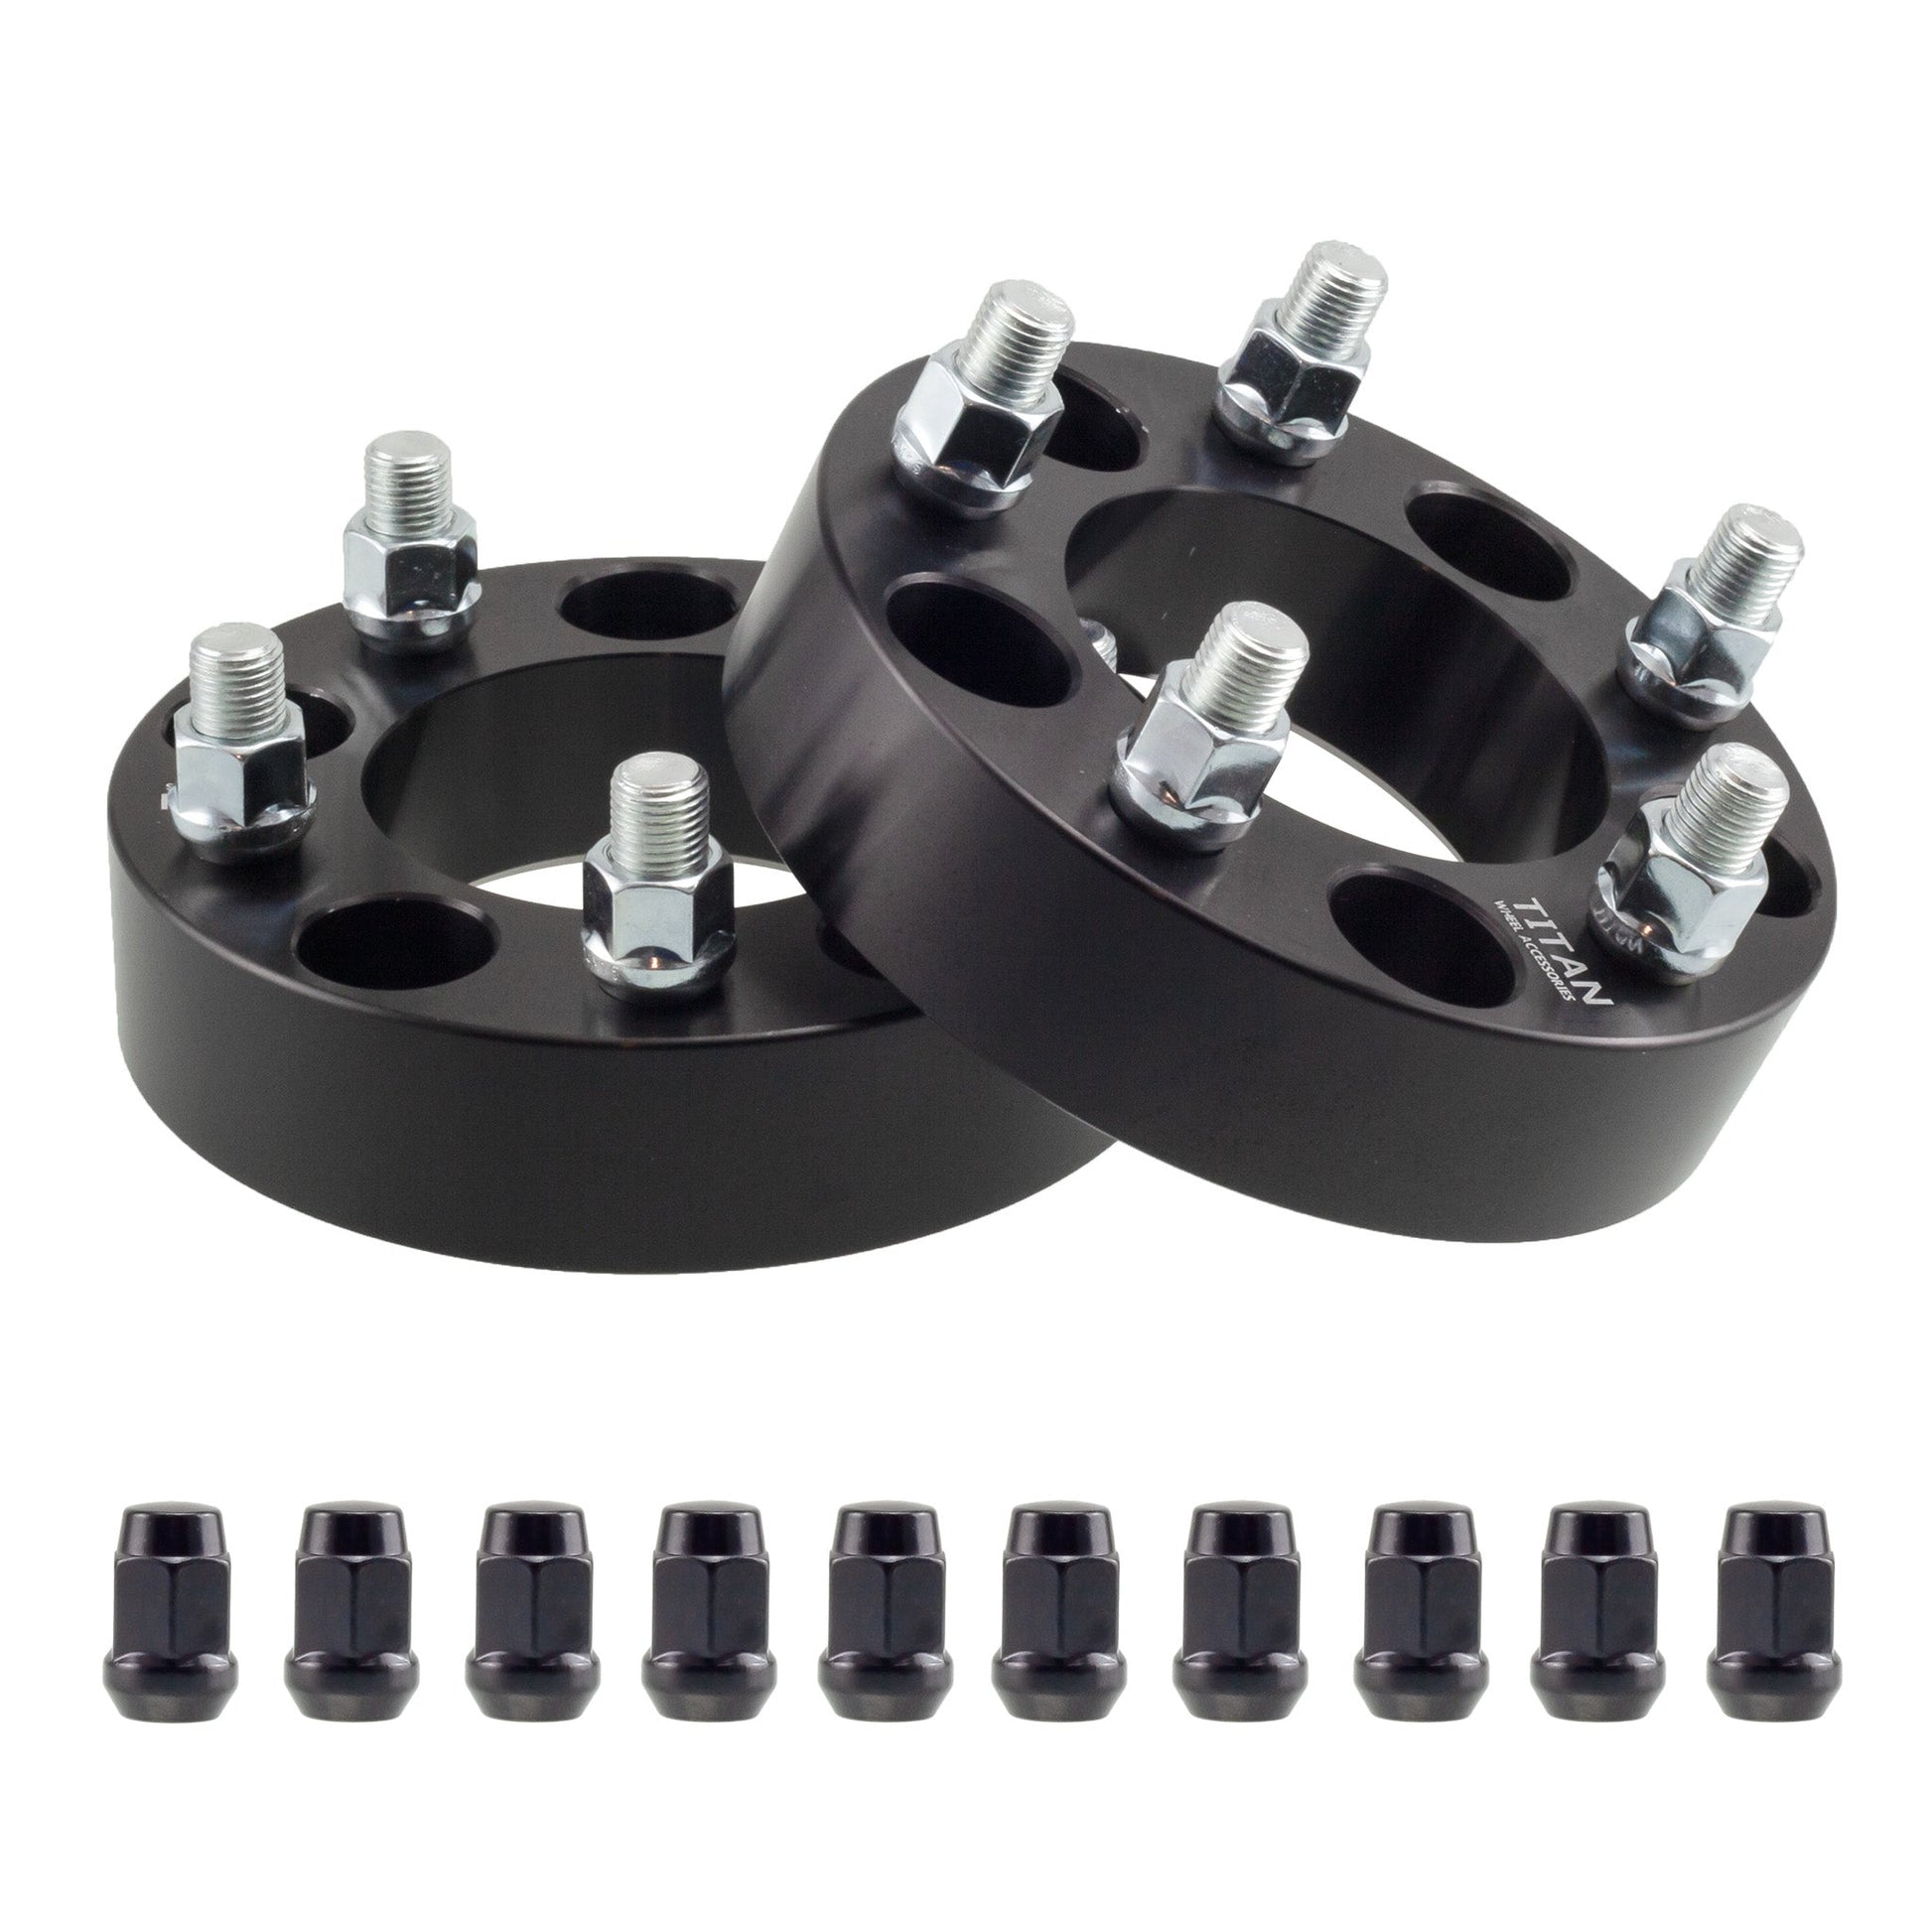 25mm (1") Titan Wheel Spacers for Nissan Infiniti Q50 G35 G37 350Z 370Z Altima | 5x114.3 | 12x1.25 Studs | 66.1 Hubcentric | Titan Wheel Accessories